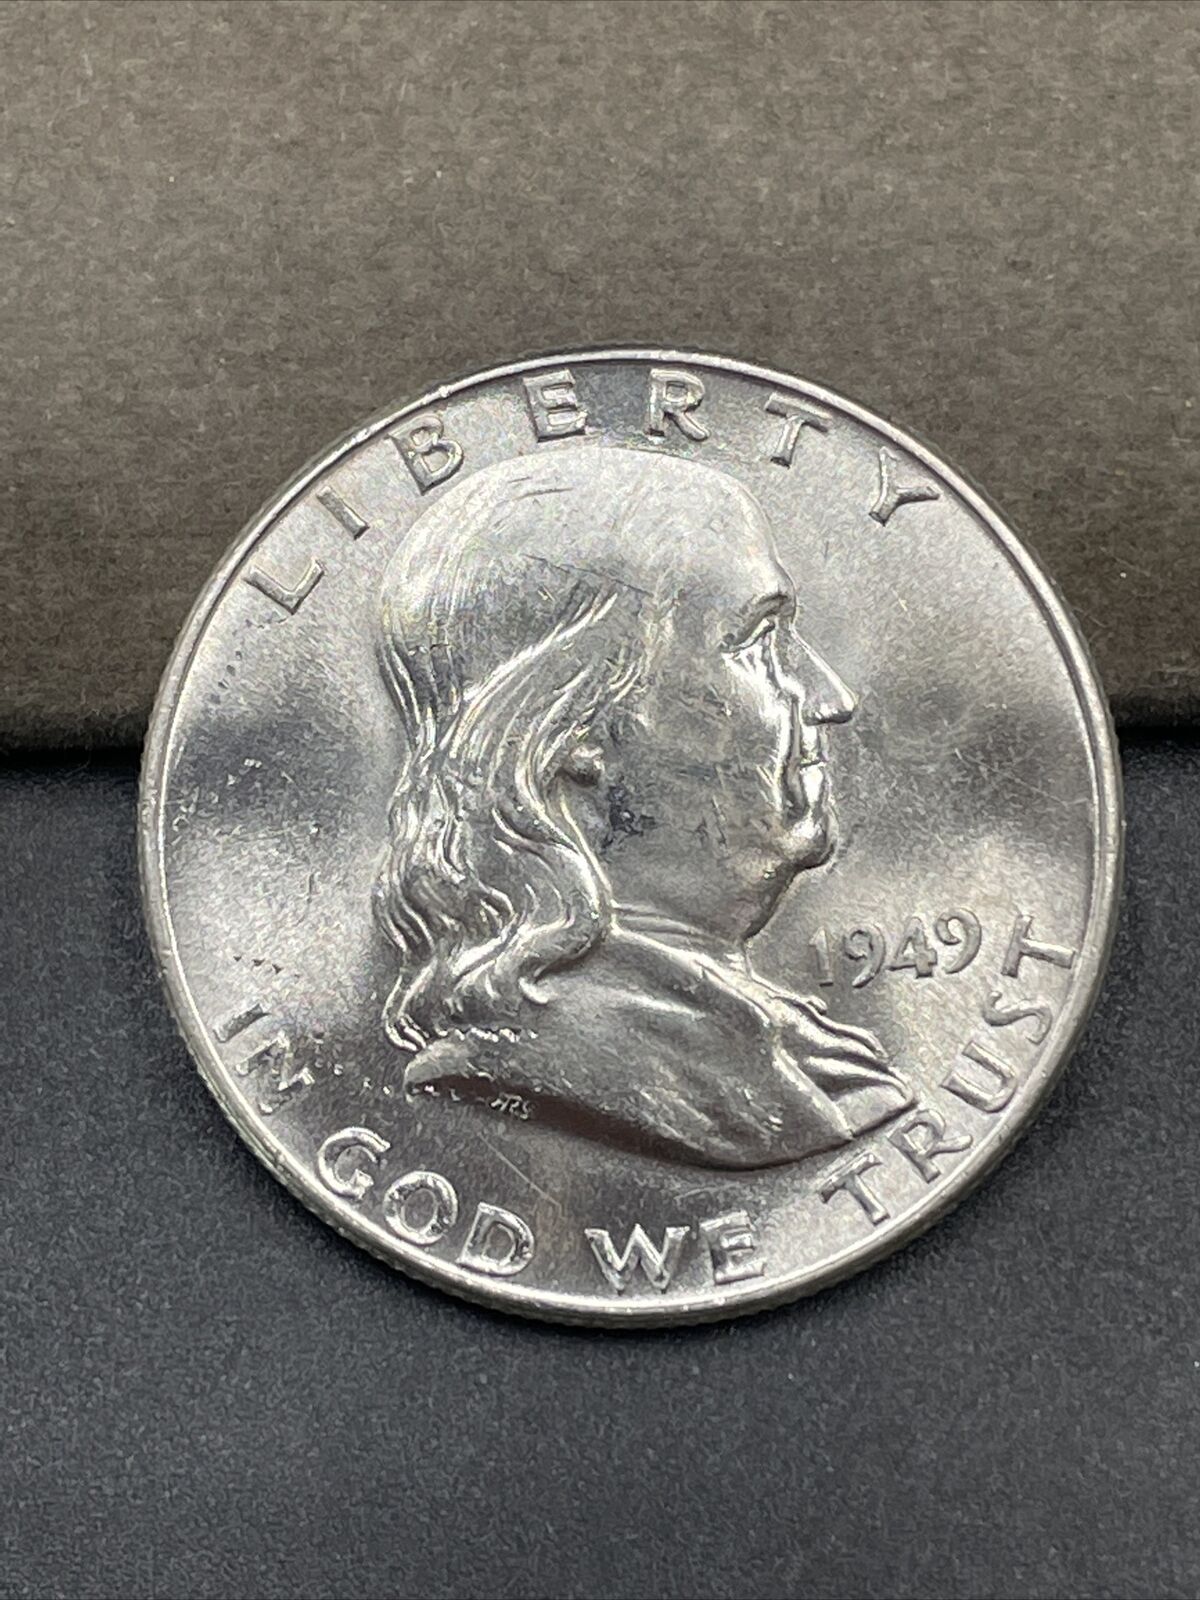 1949-p Franklin Half Dollar Silver Uncirculated Us Coin G128